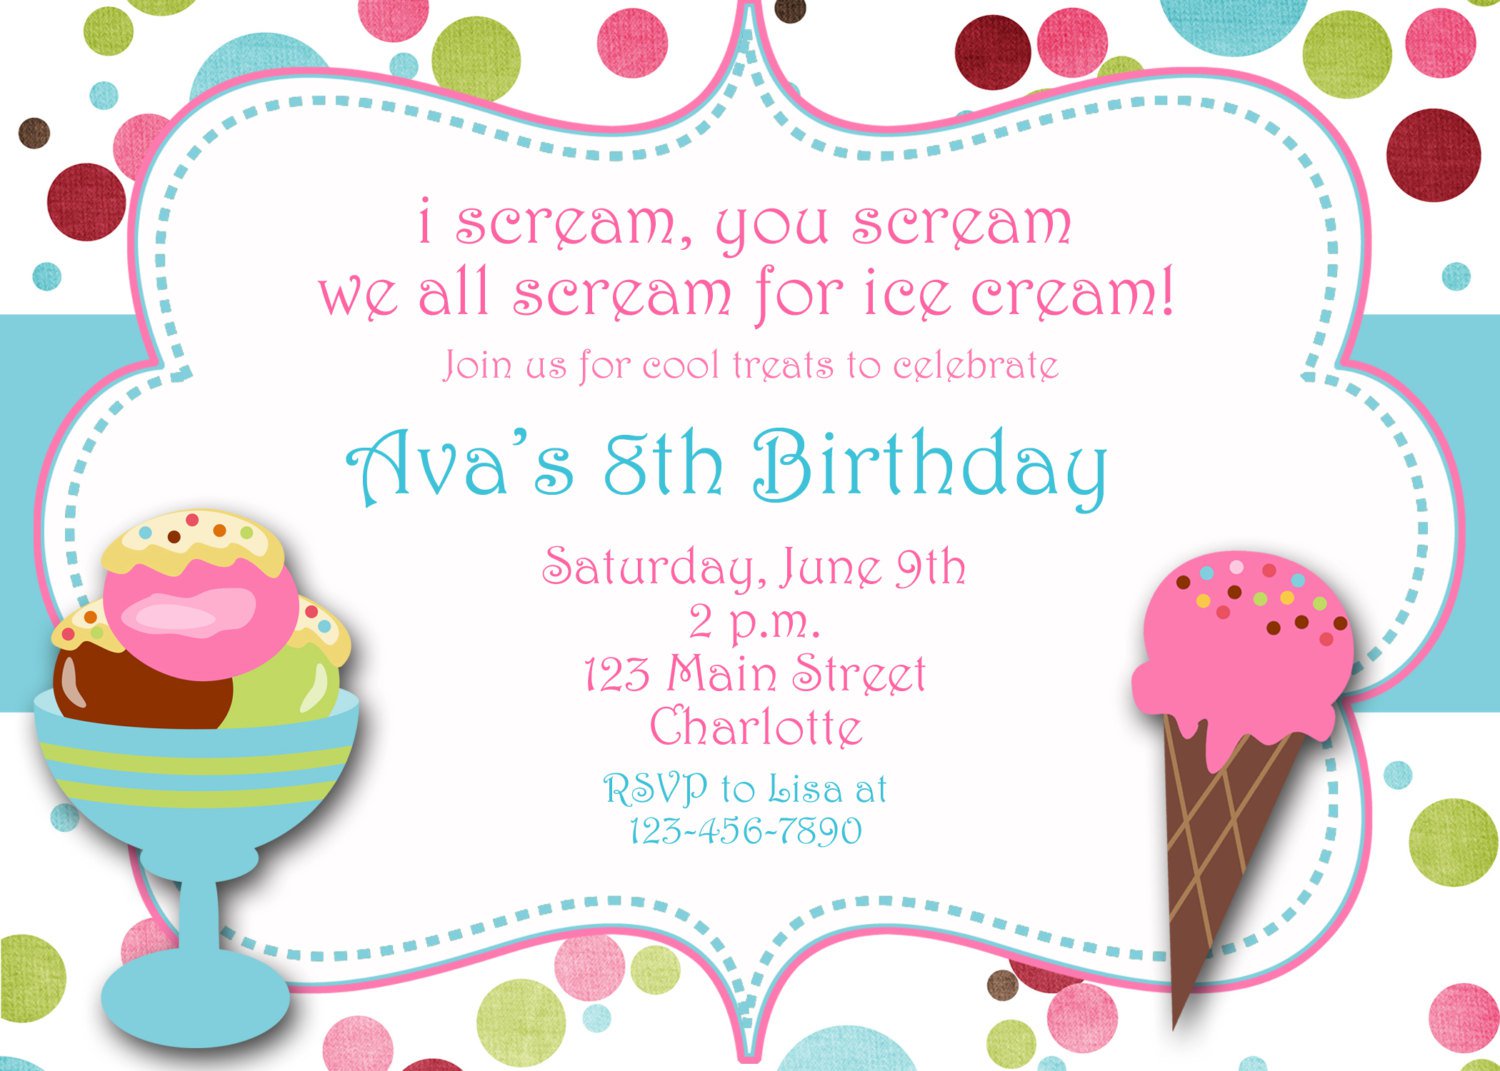 ice-cream-birthday-invitations-invitation-design-blog